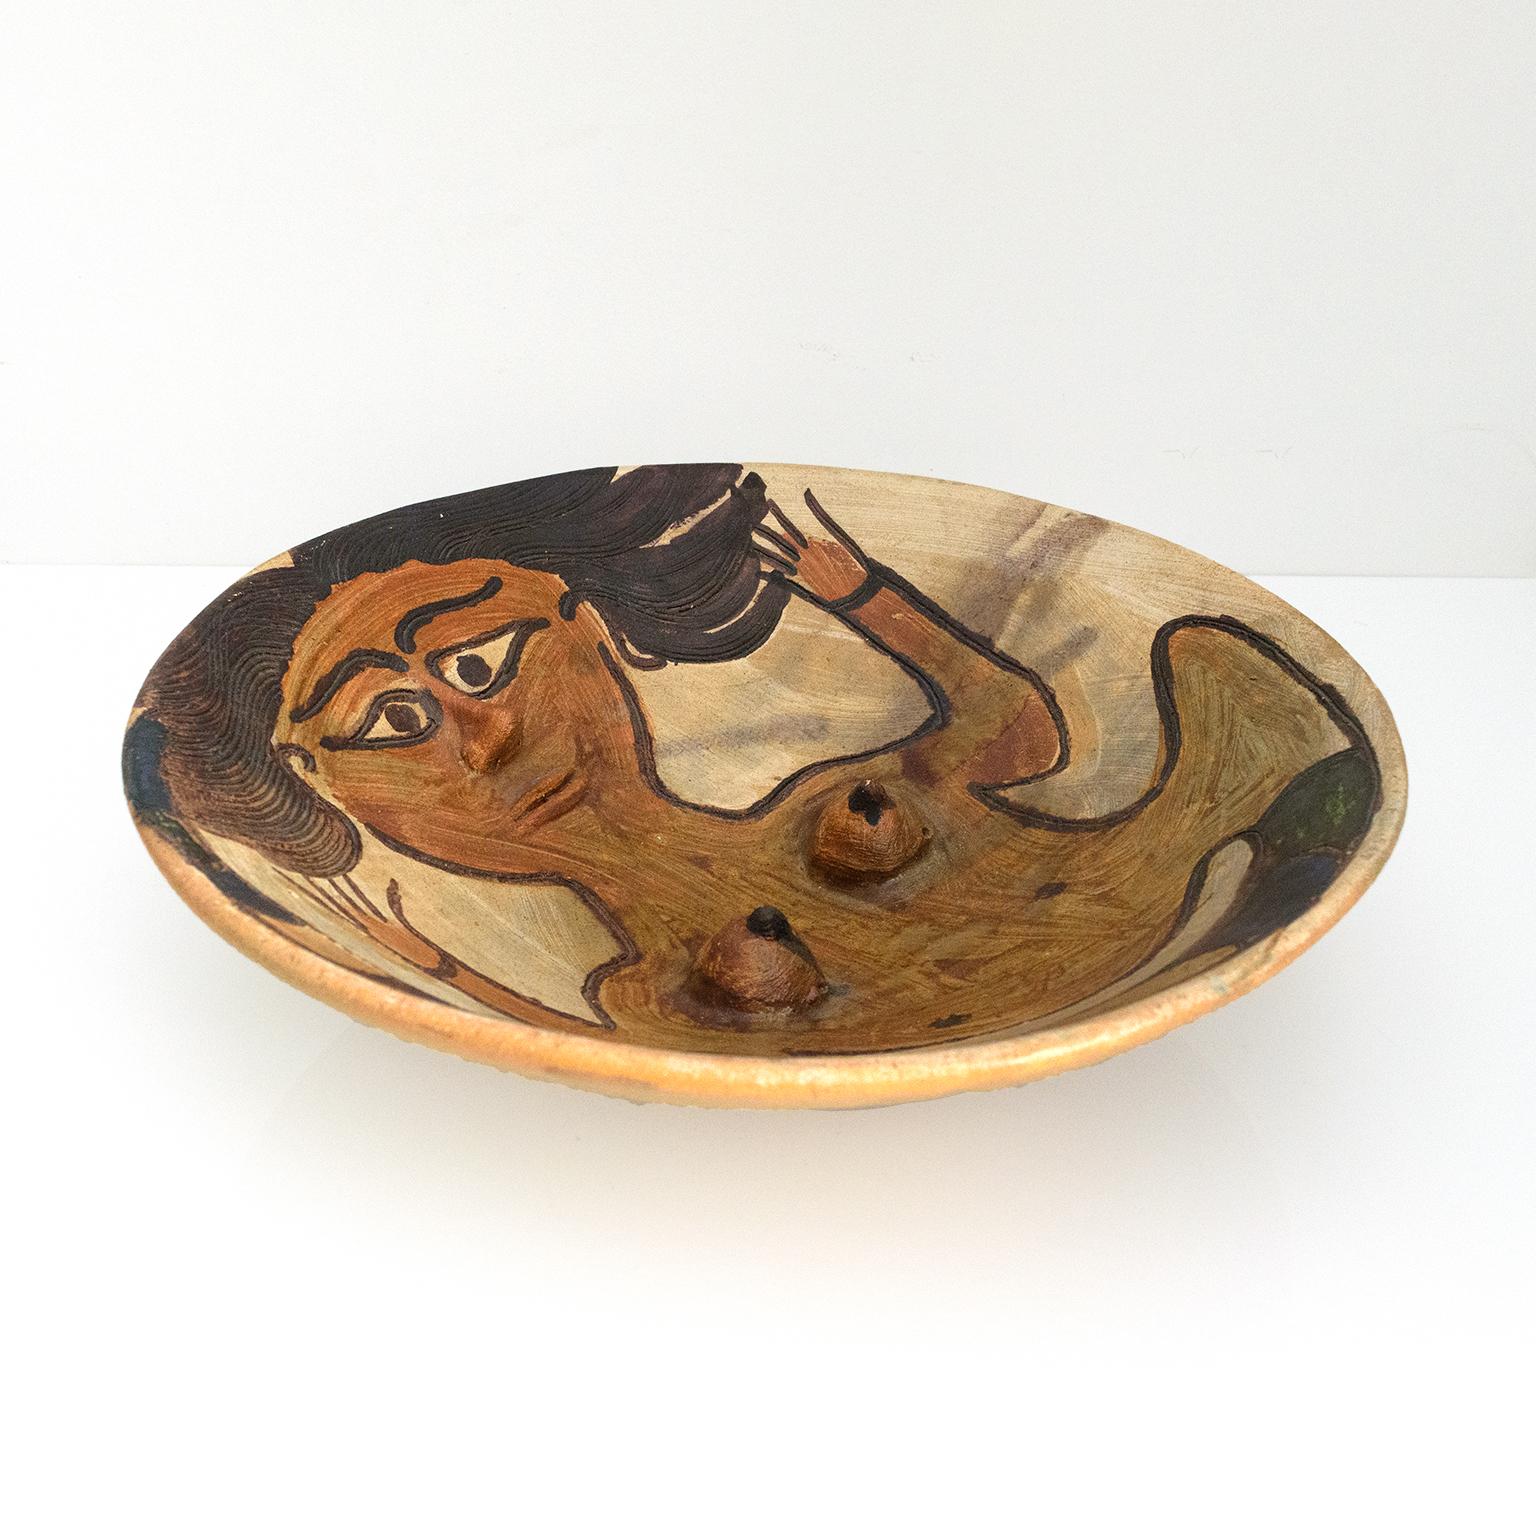 Dolores Porras, Mermaid Bowls, Santa Maria Atzompa, Oaxaca, Mexico, '2 Pieces' 1